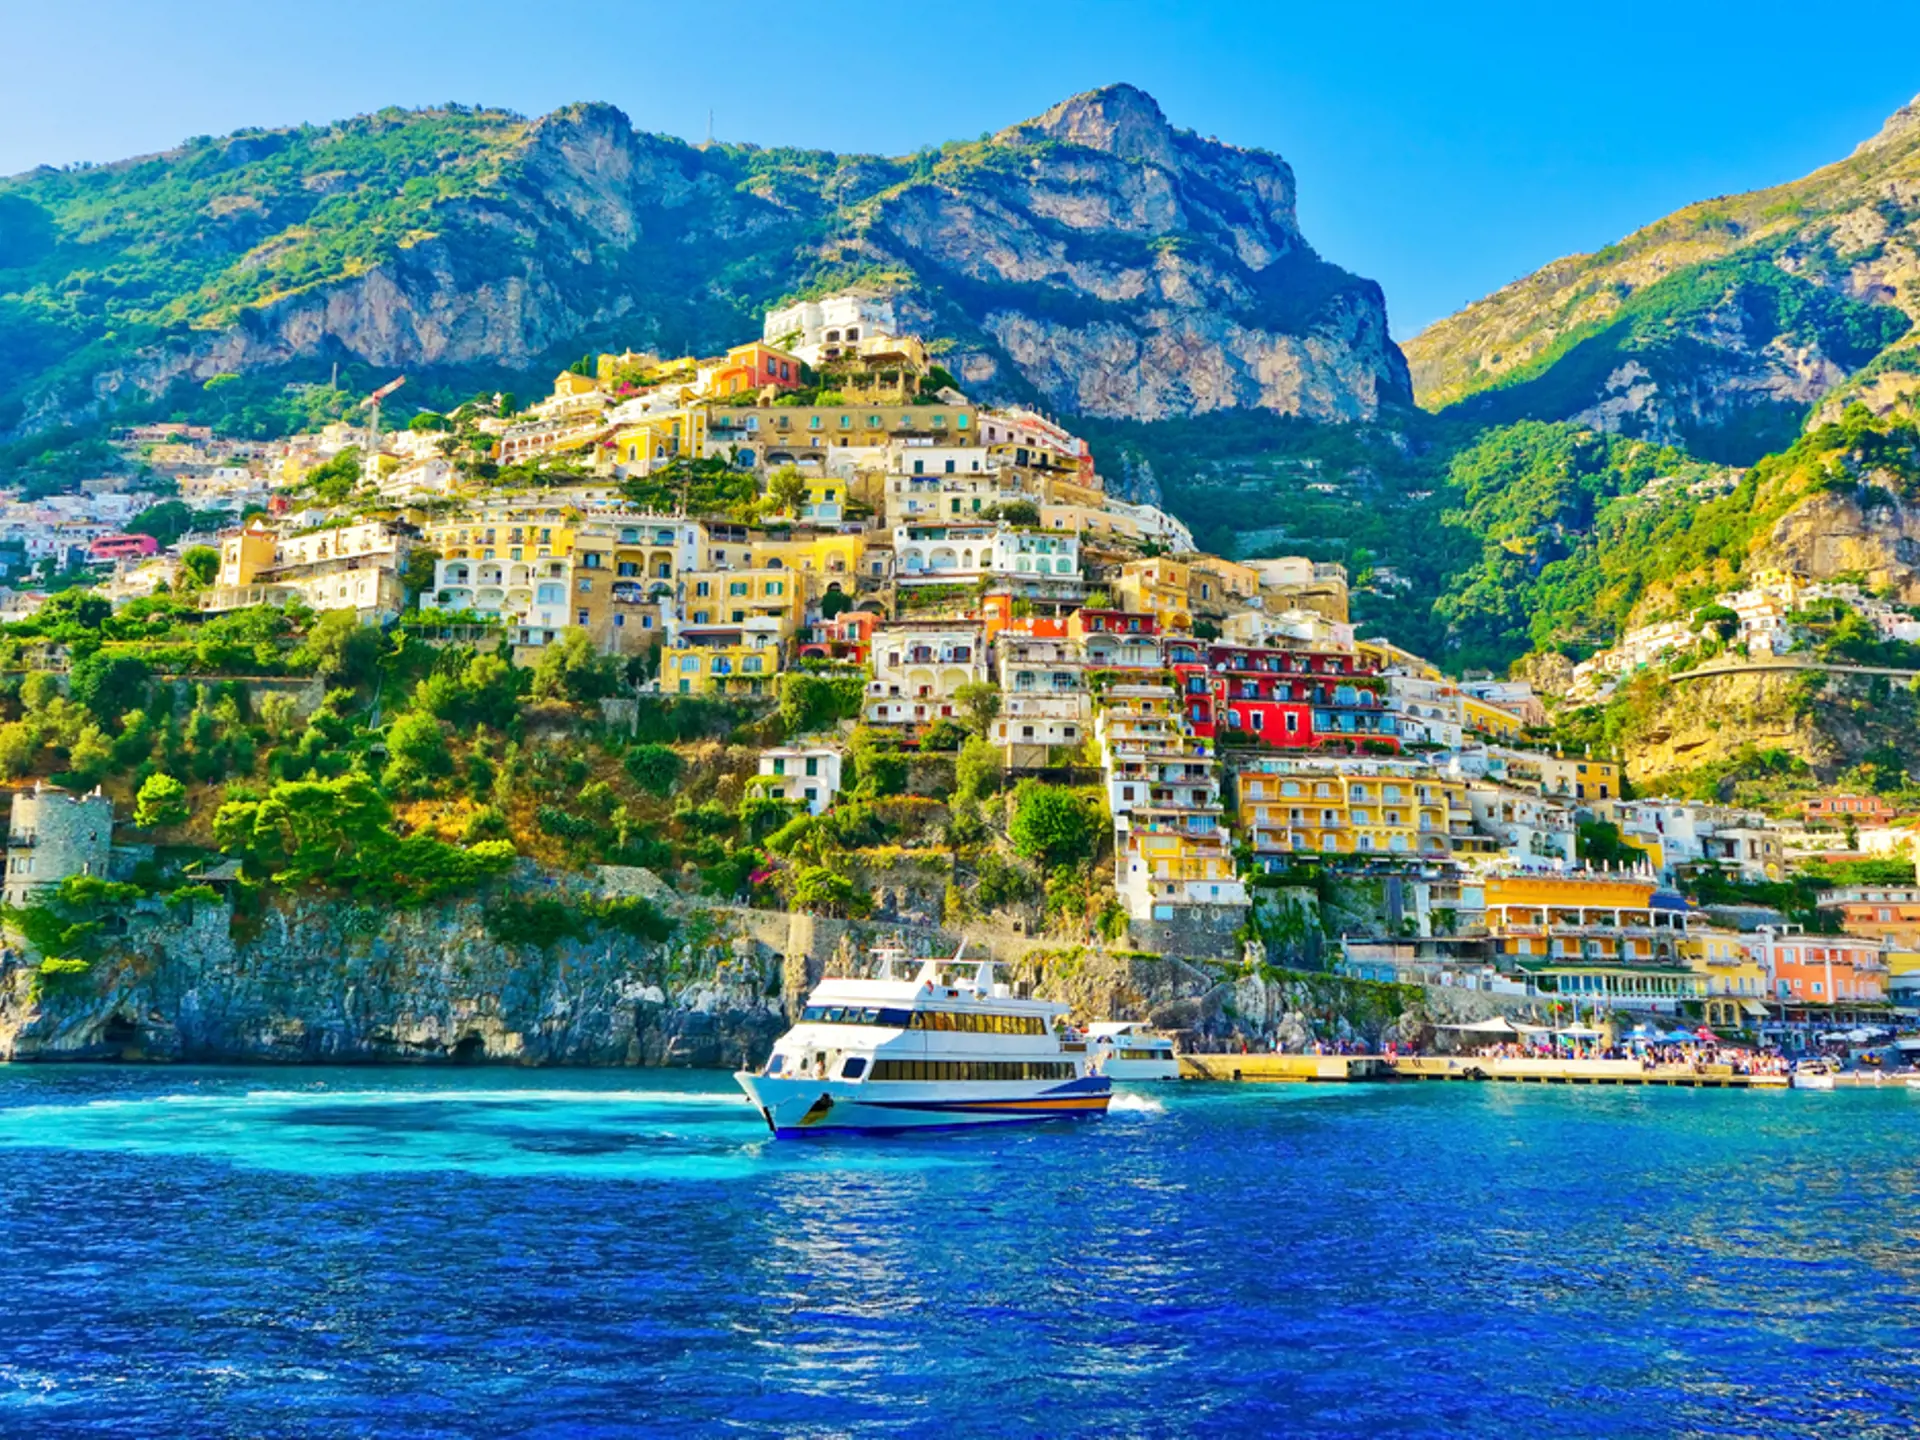 Tag på bådtur til kystbyen Positano